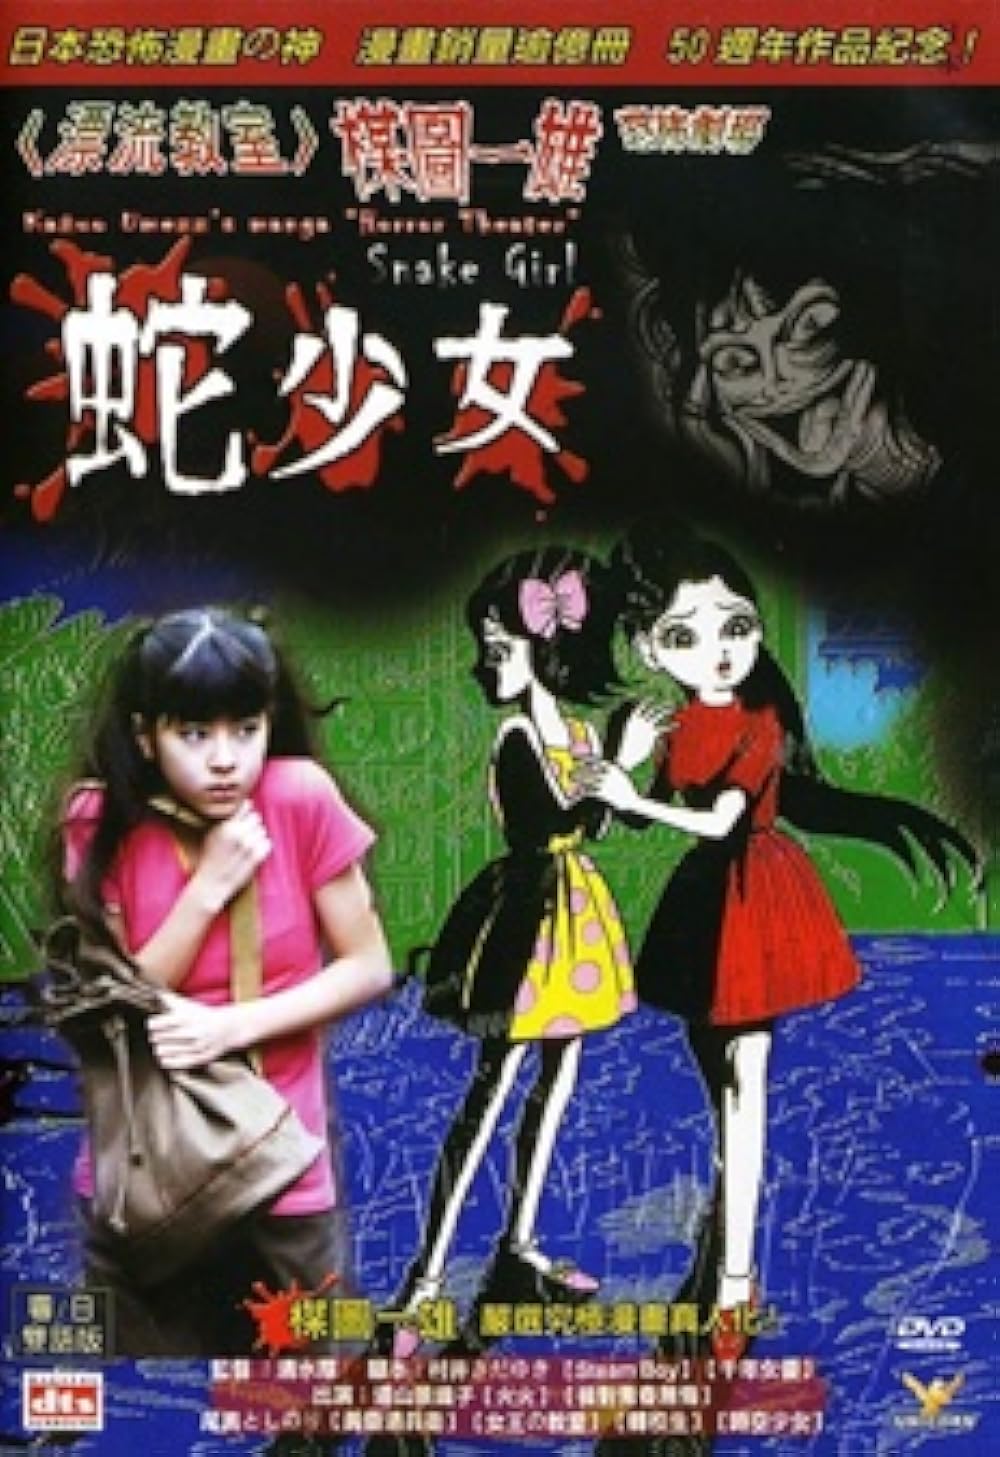 Kazuo Umezu\'s Horror Theater: Snake Girl